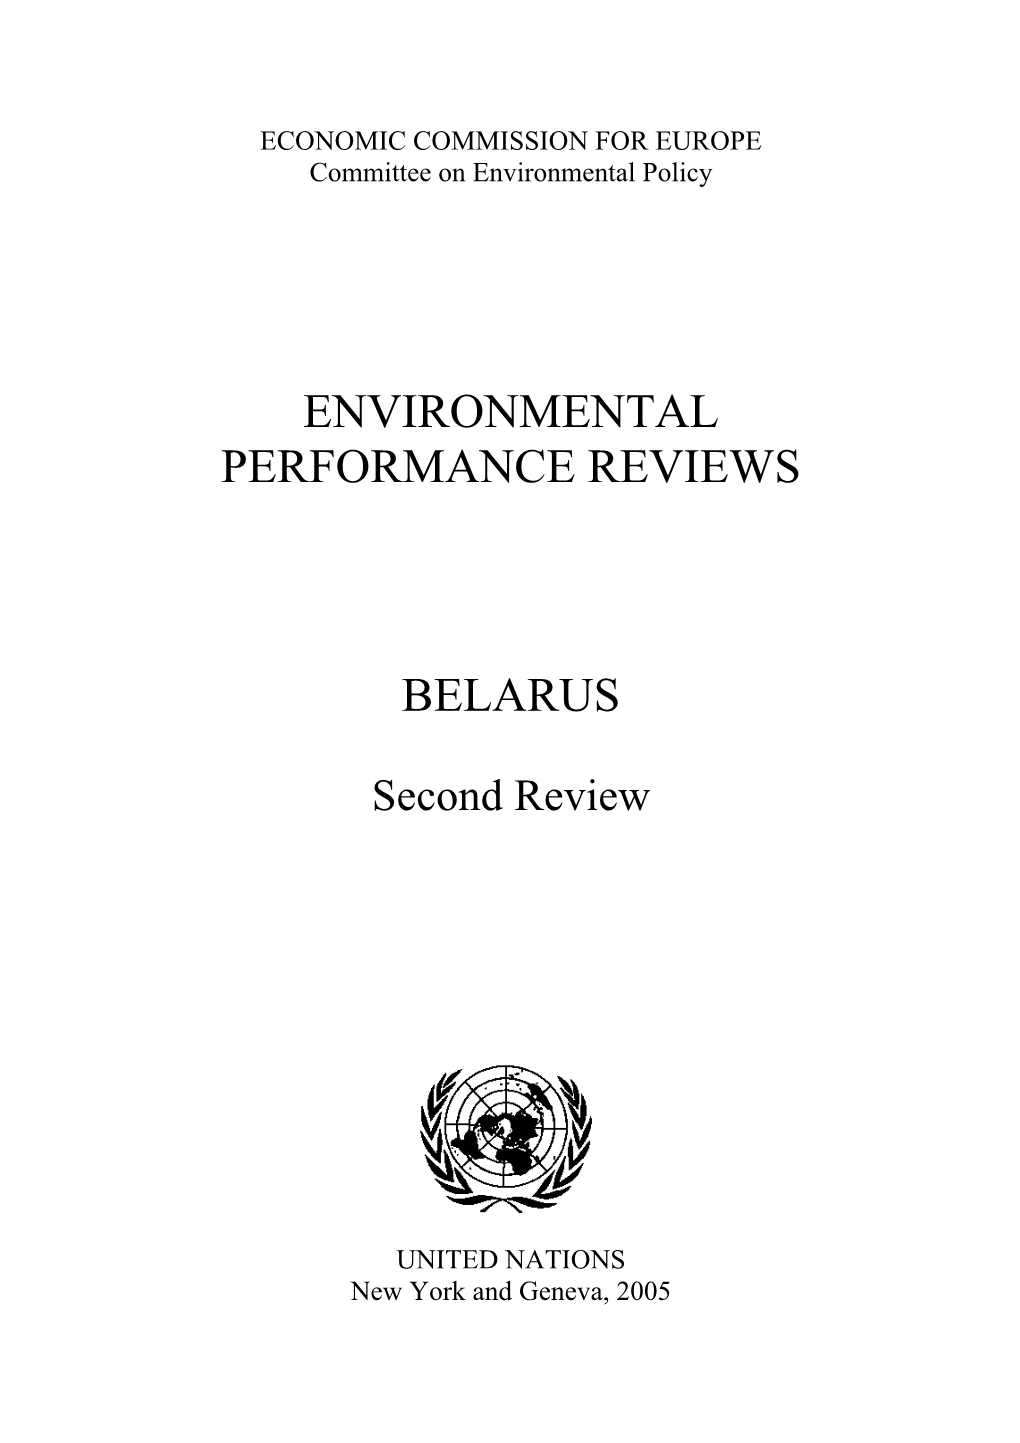 Environmental Performance Reviews Belarus